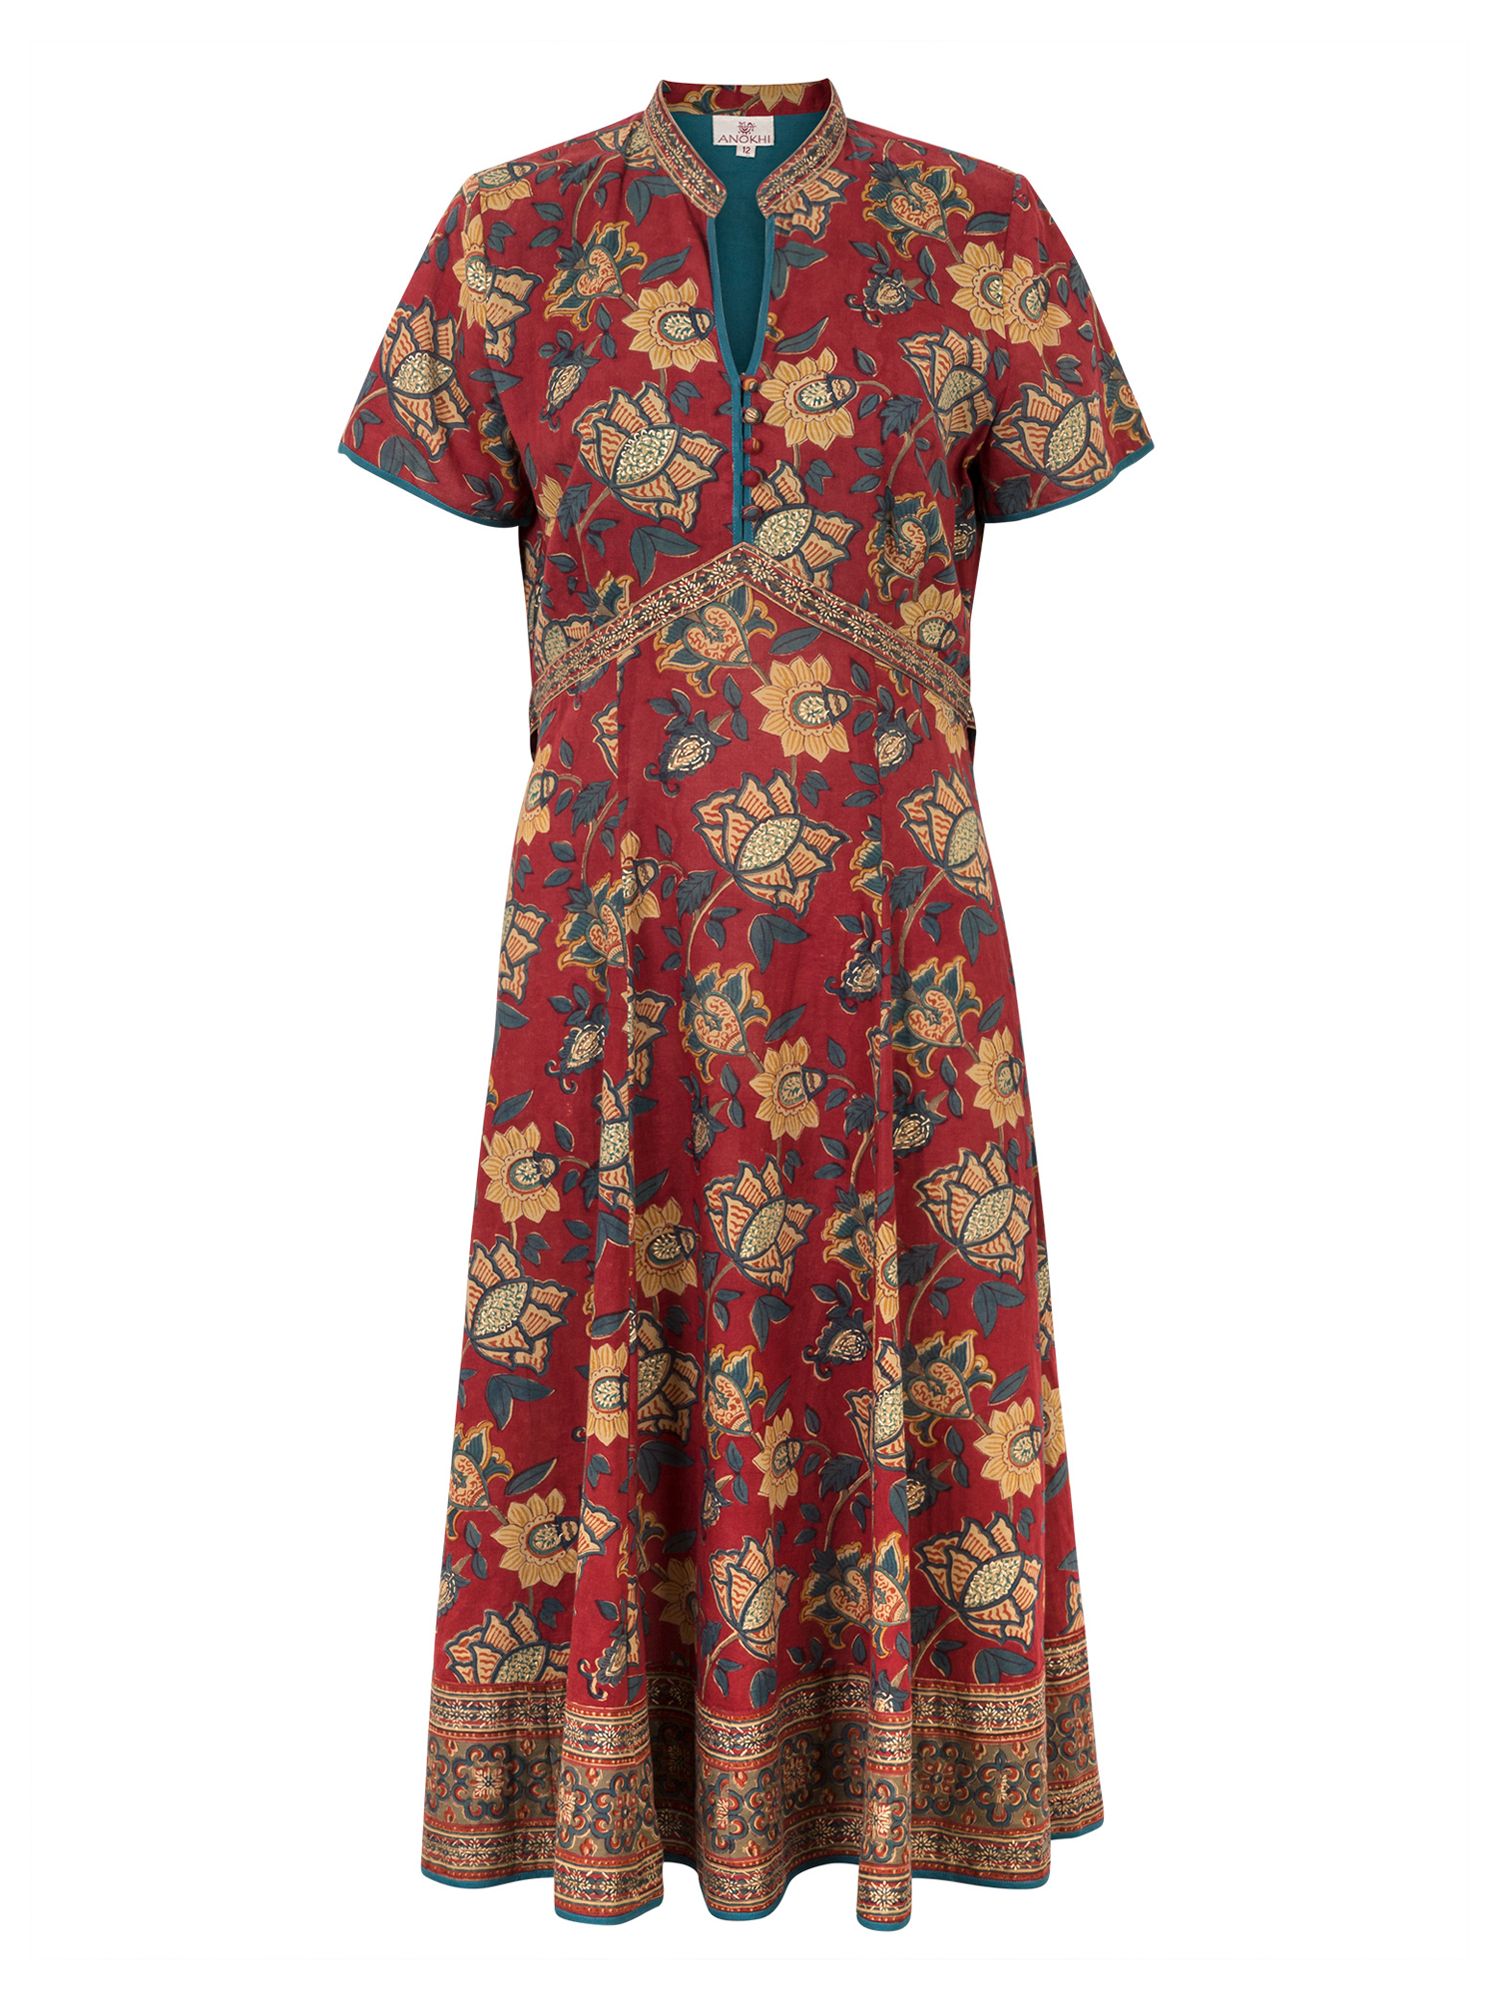 East Anokhi Shirin Print Dress, Red/Multi